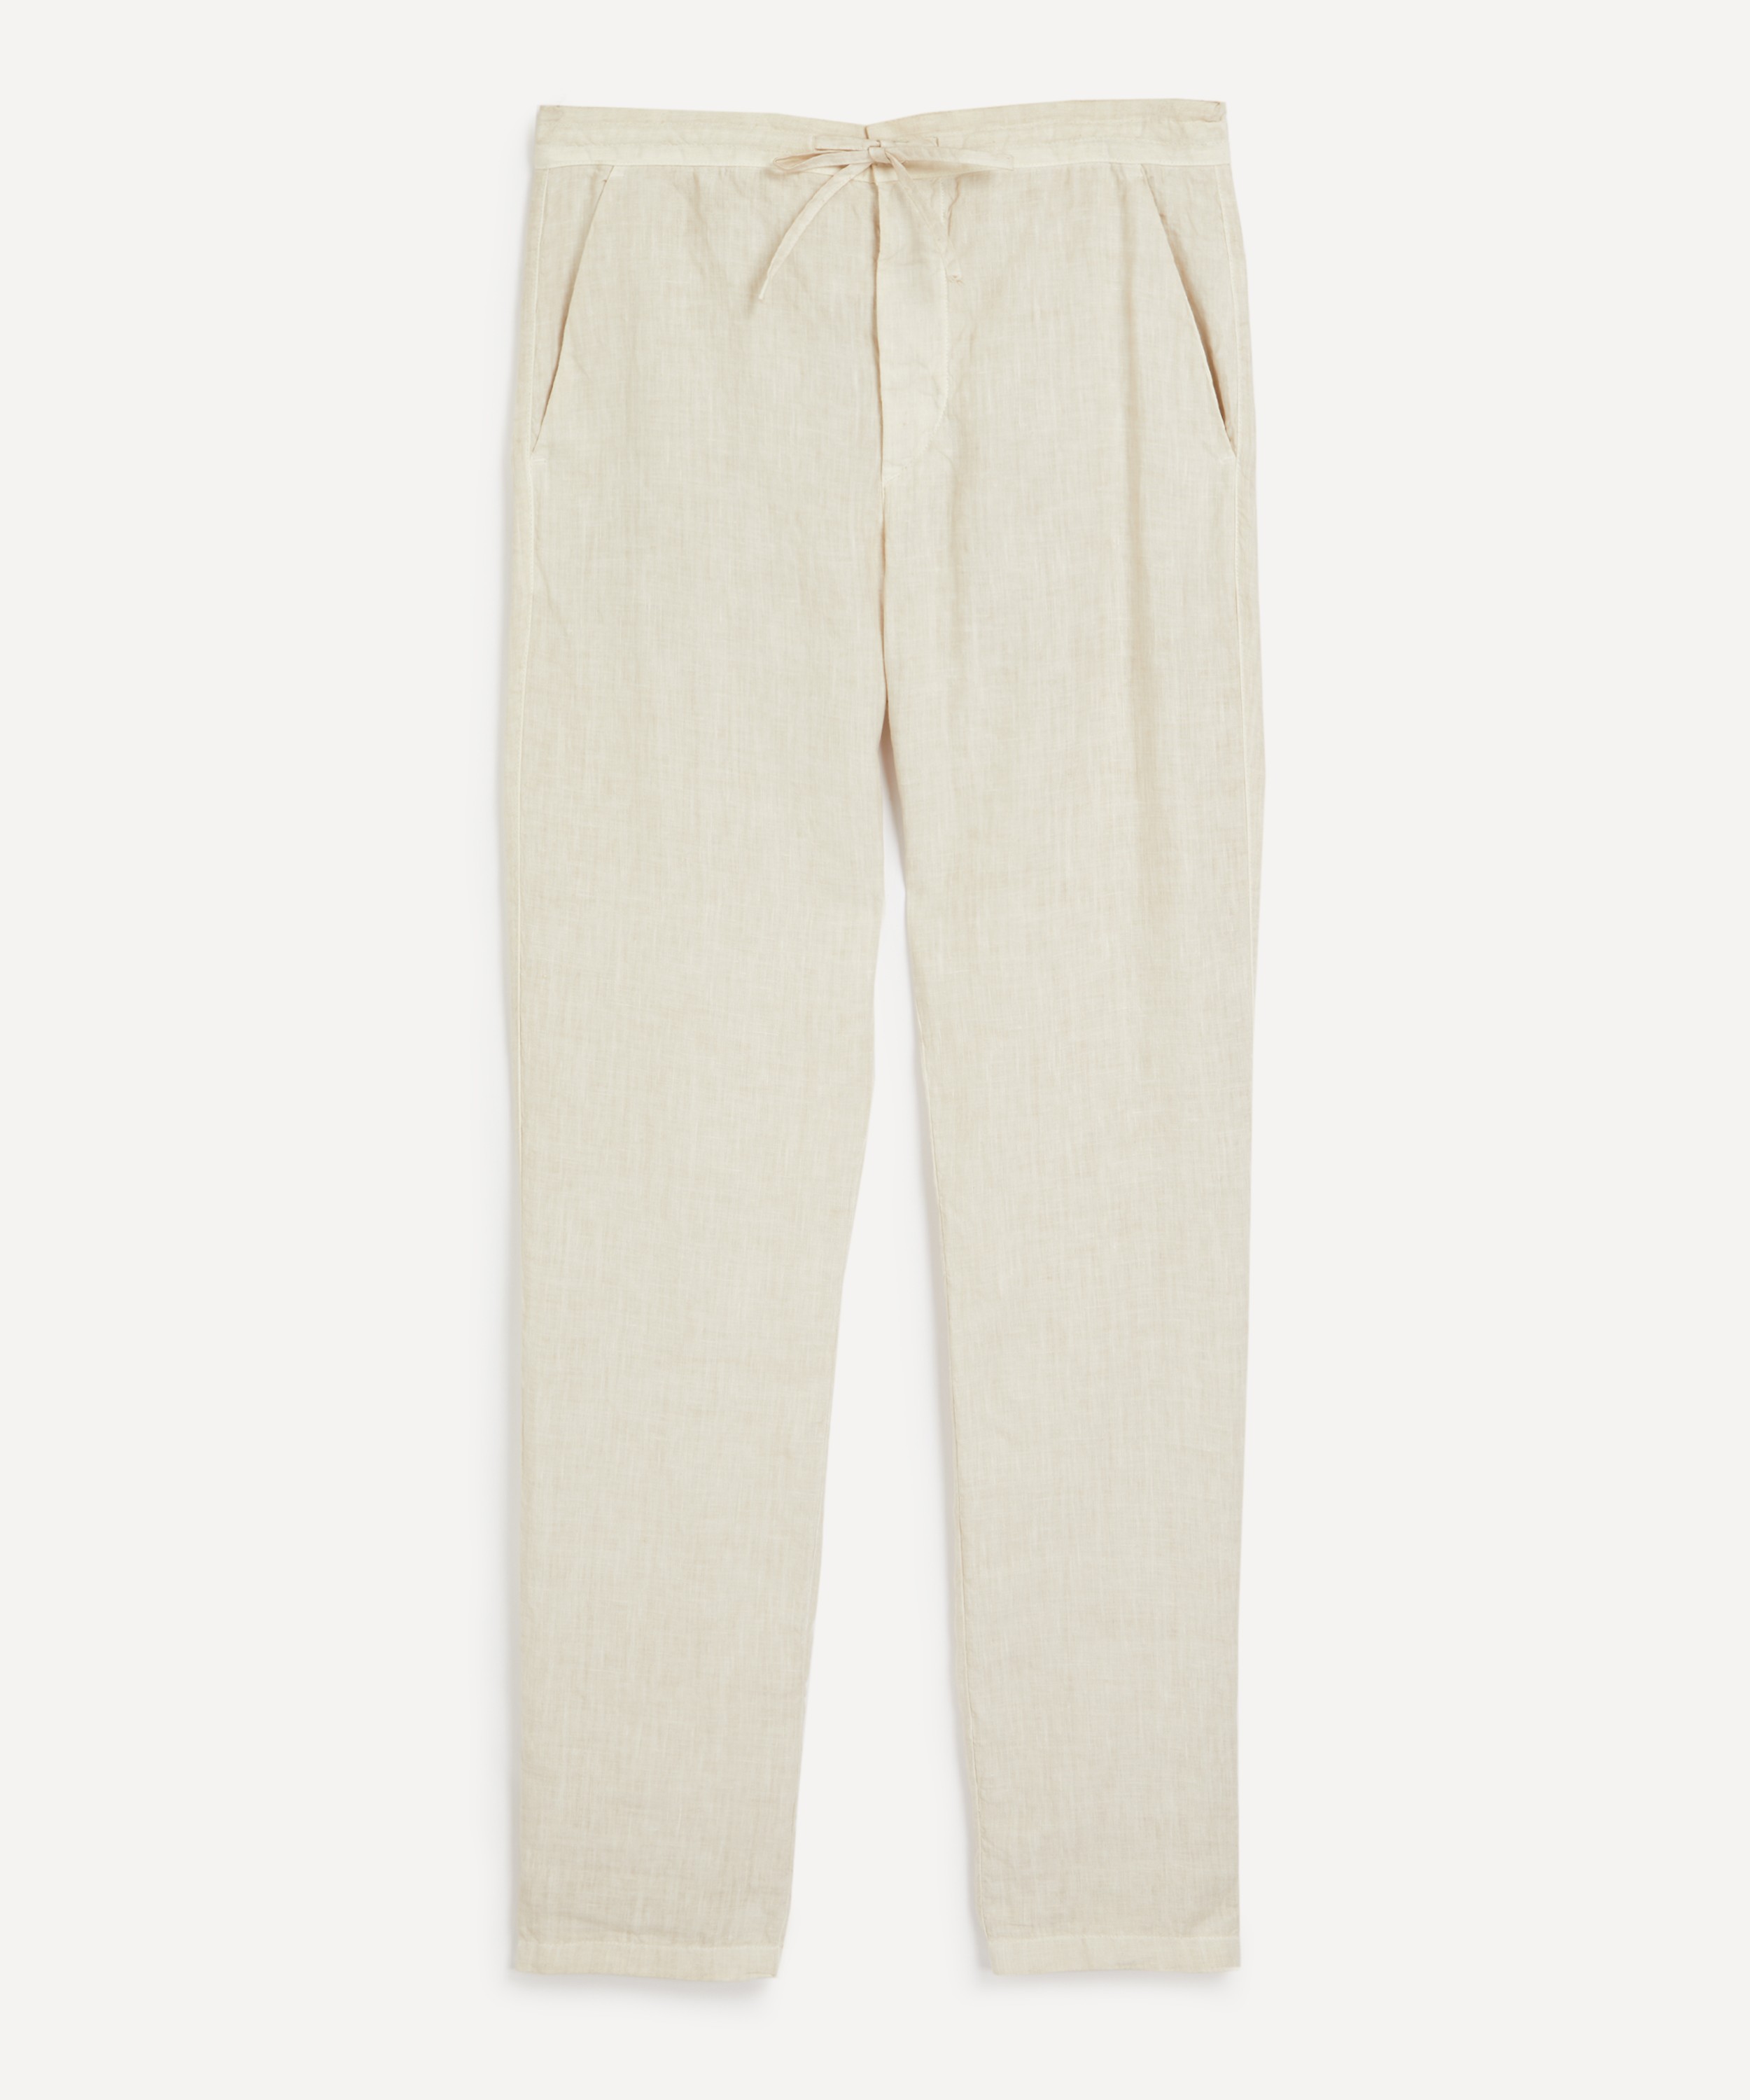 120% Lino - Linen Drawstring Trousers